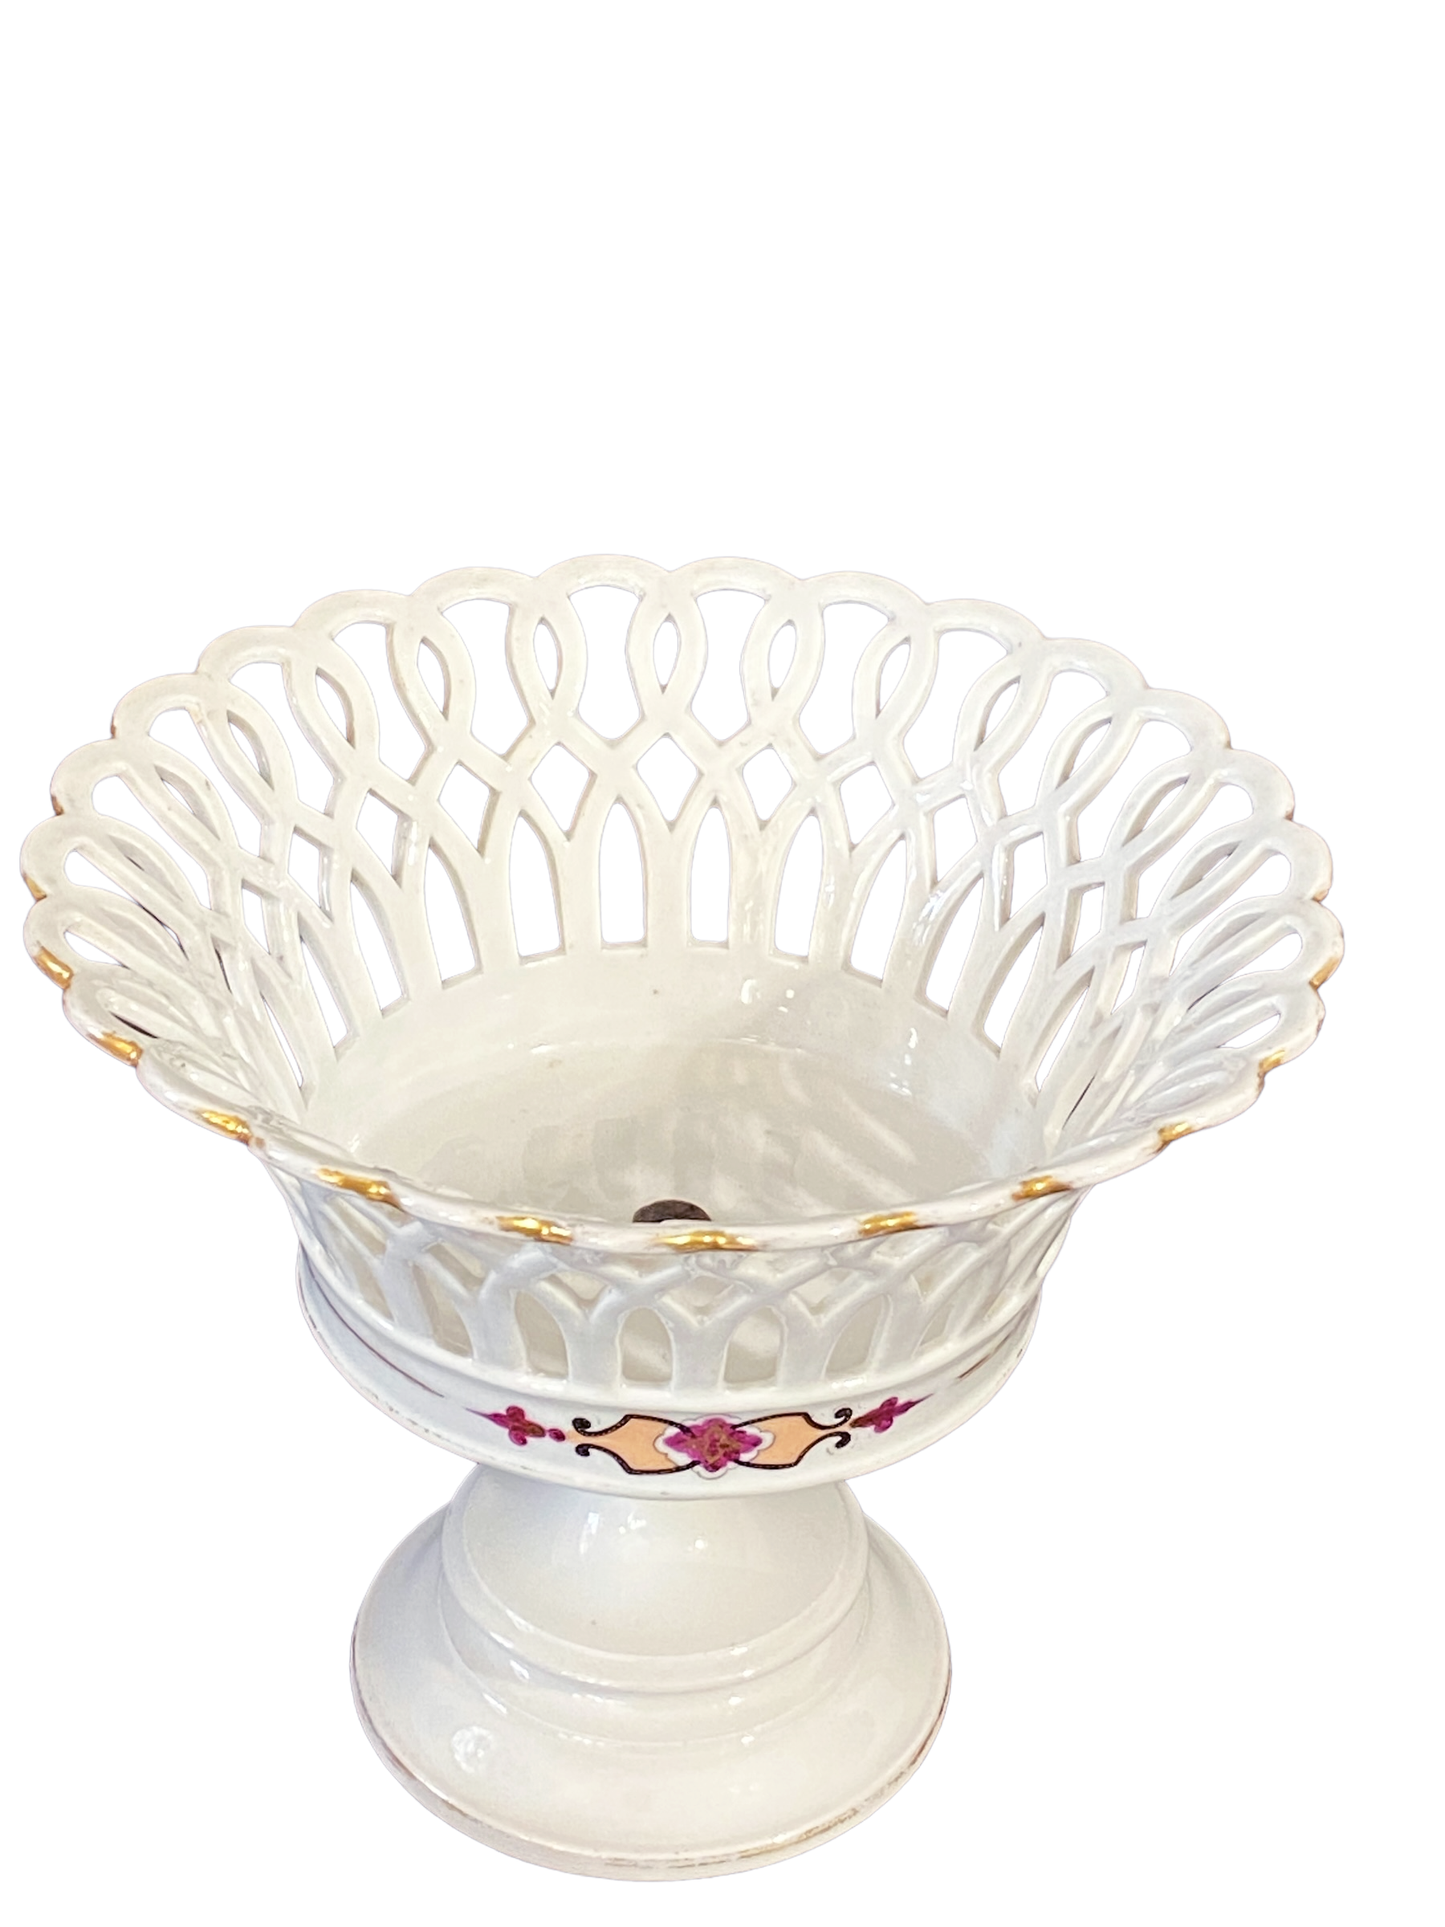 # 5040 Paris Porcelain and Parcel Gilt Reticulated Compote or Fruit Basket